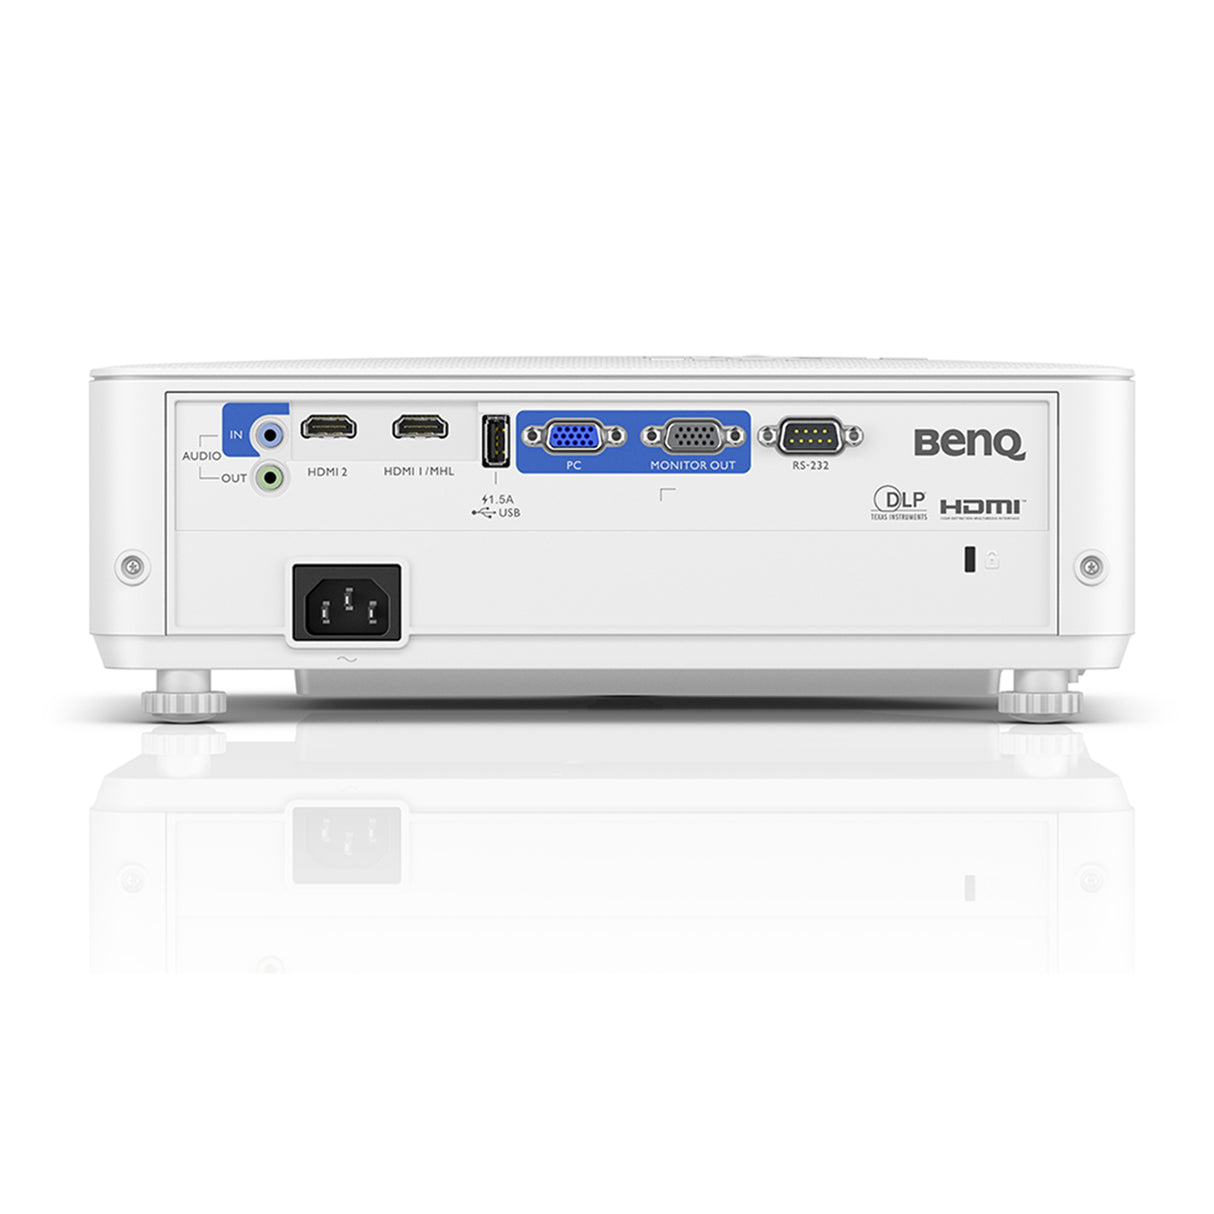 BenQ TH585 - Full HD 3500 Lumens DLP Home Theatre Projector